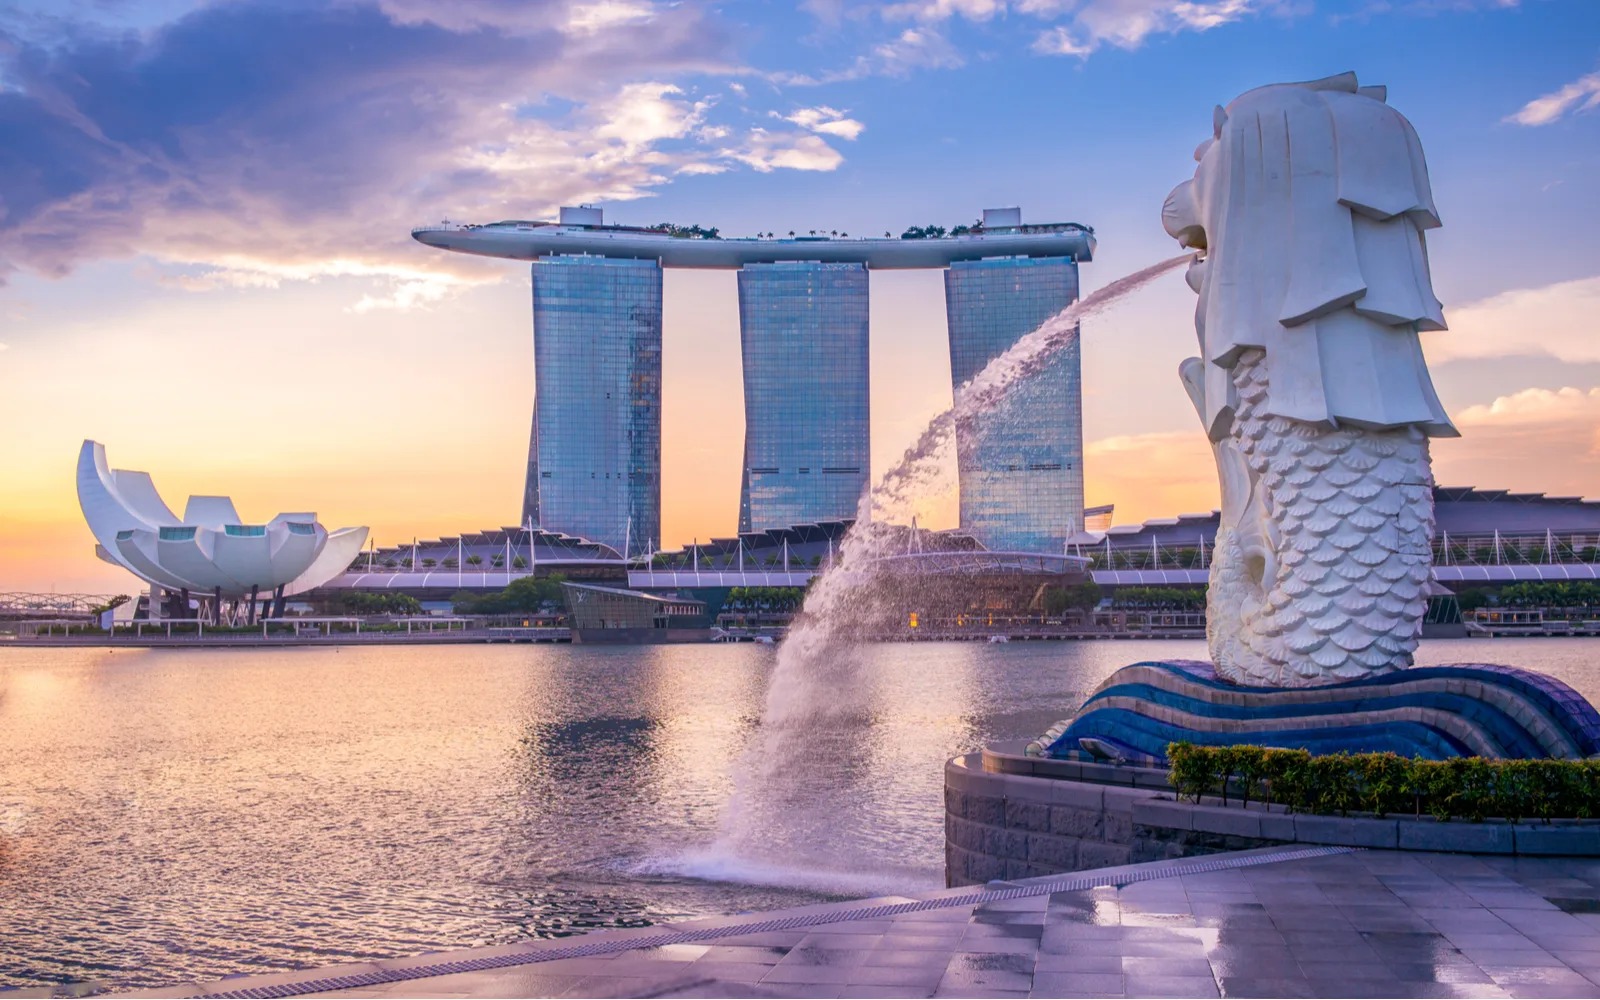 Singapore: A Garden City of Dreams, Diversity, and Exemplary Progress